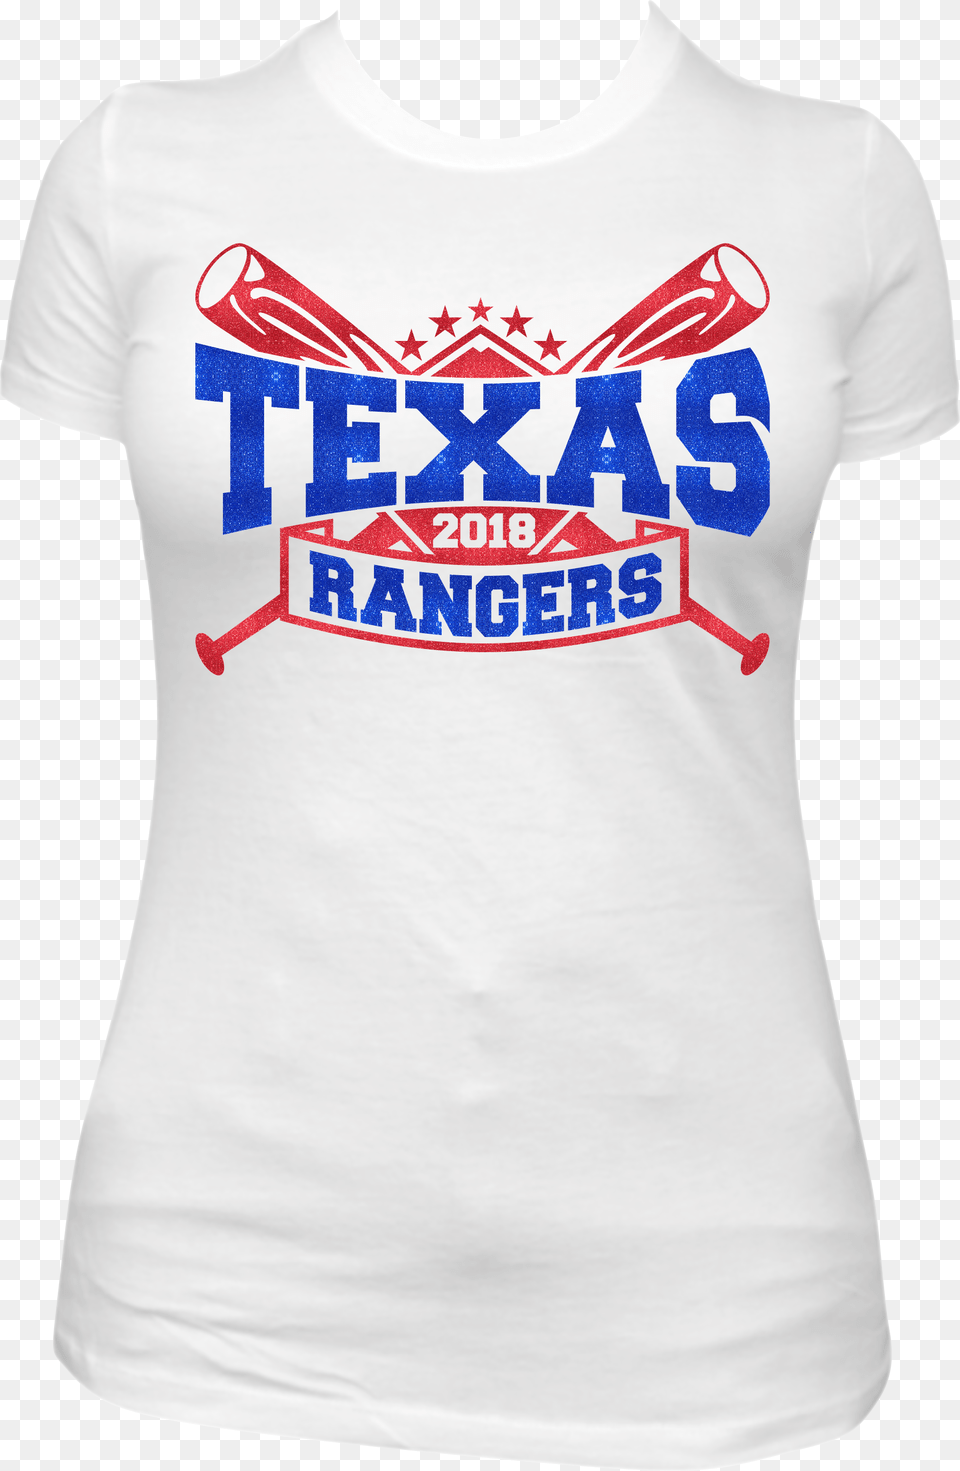 Texas Rangers Shirts Near Me State University, Clothing, T-shirt, Shirt Free Png Download